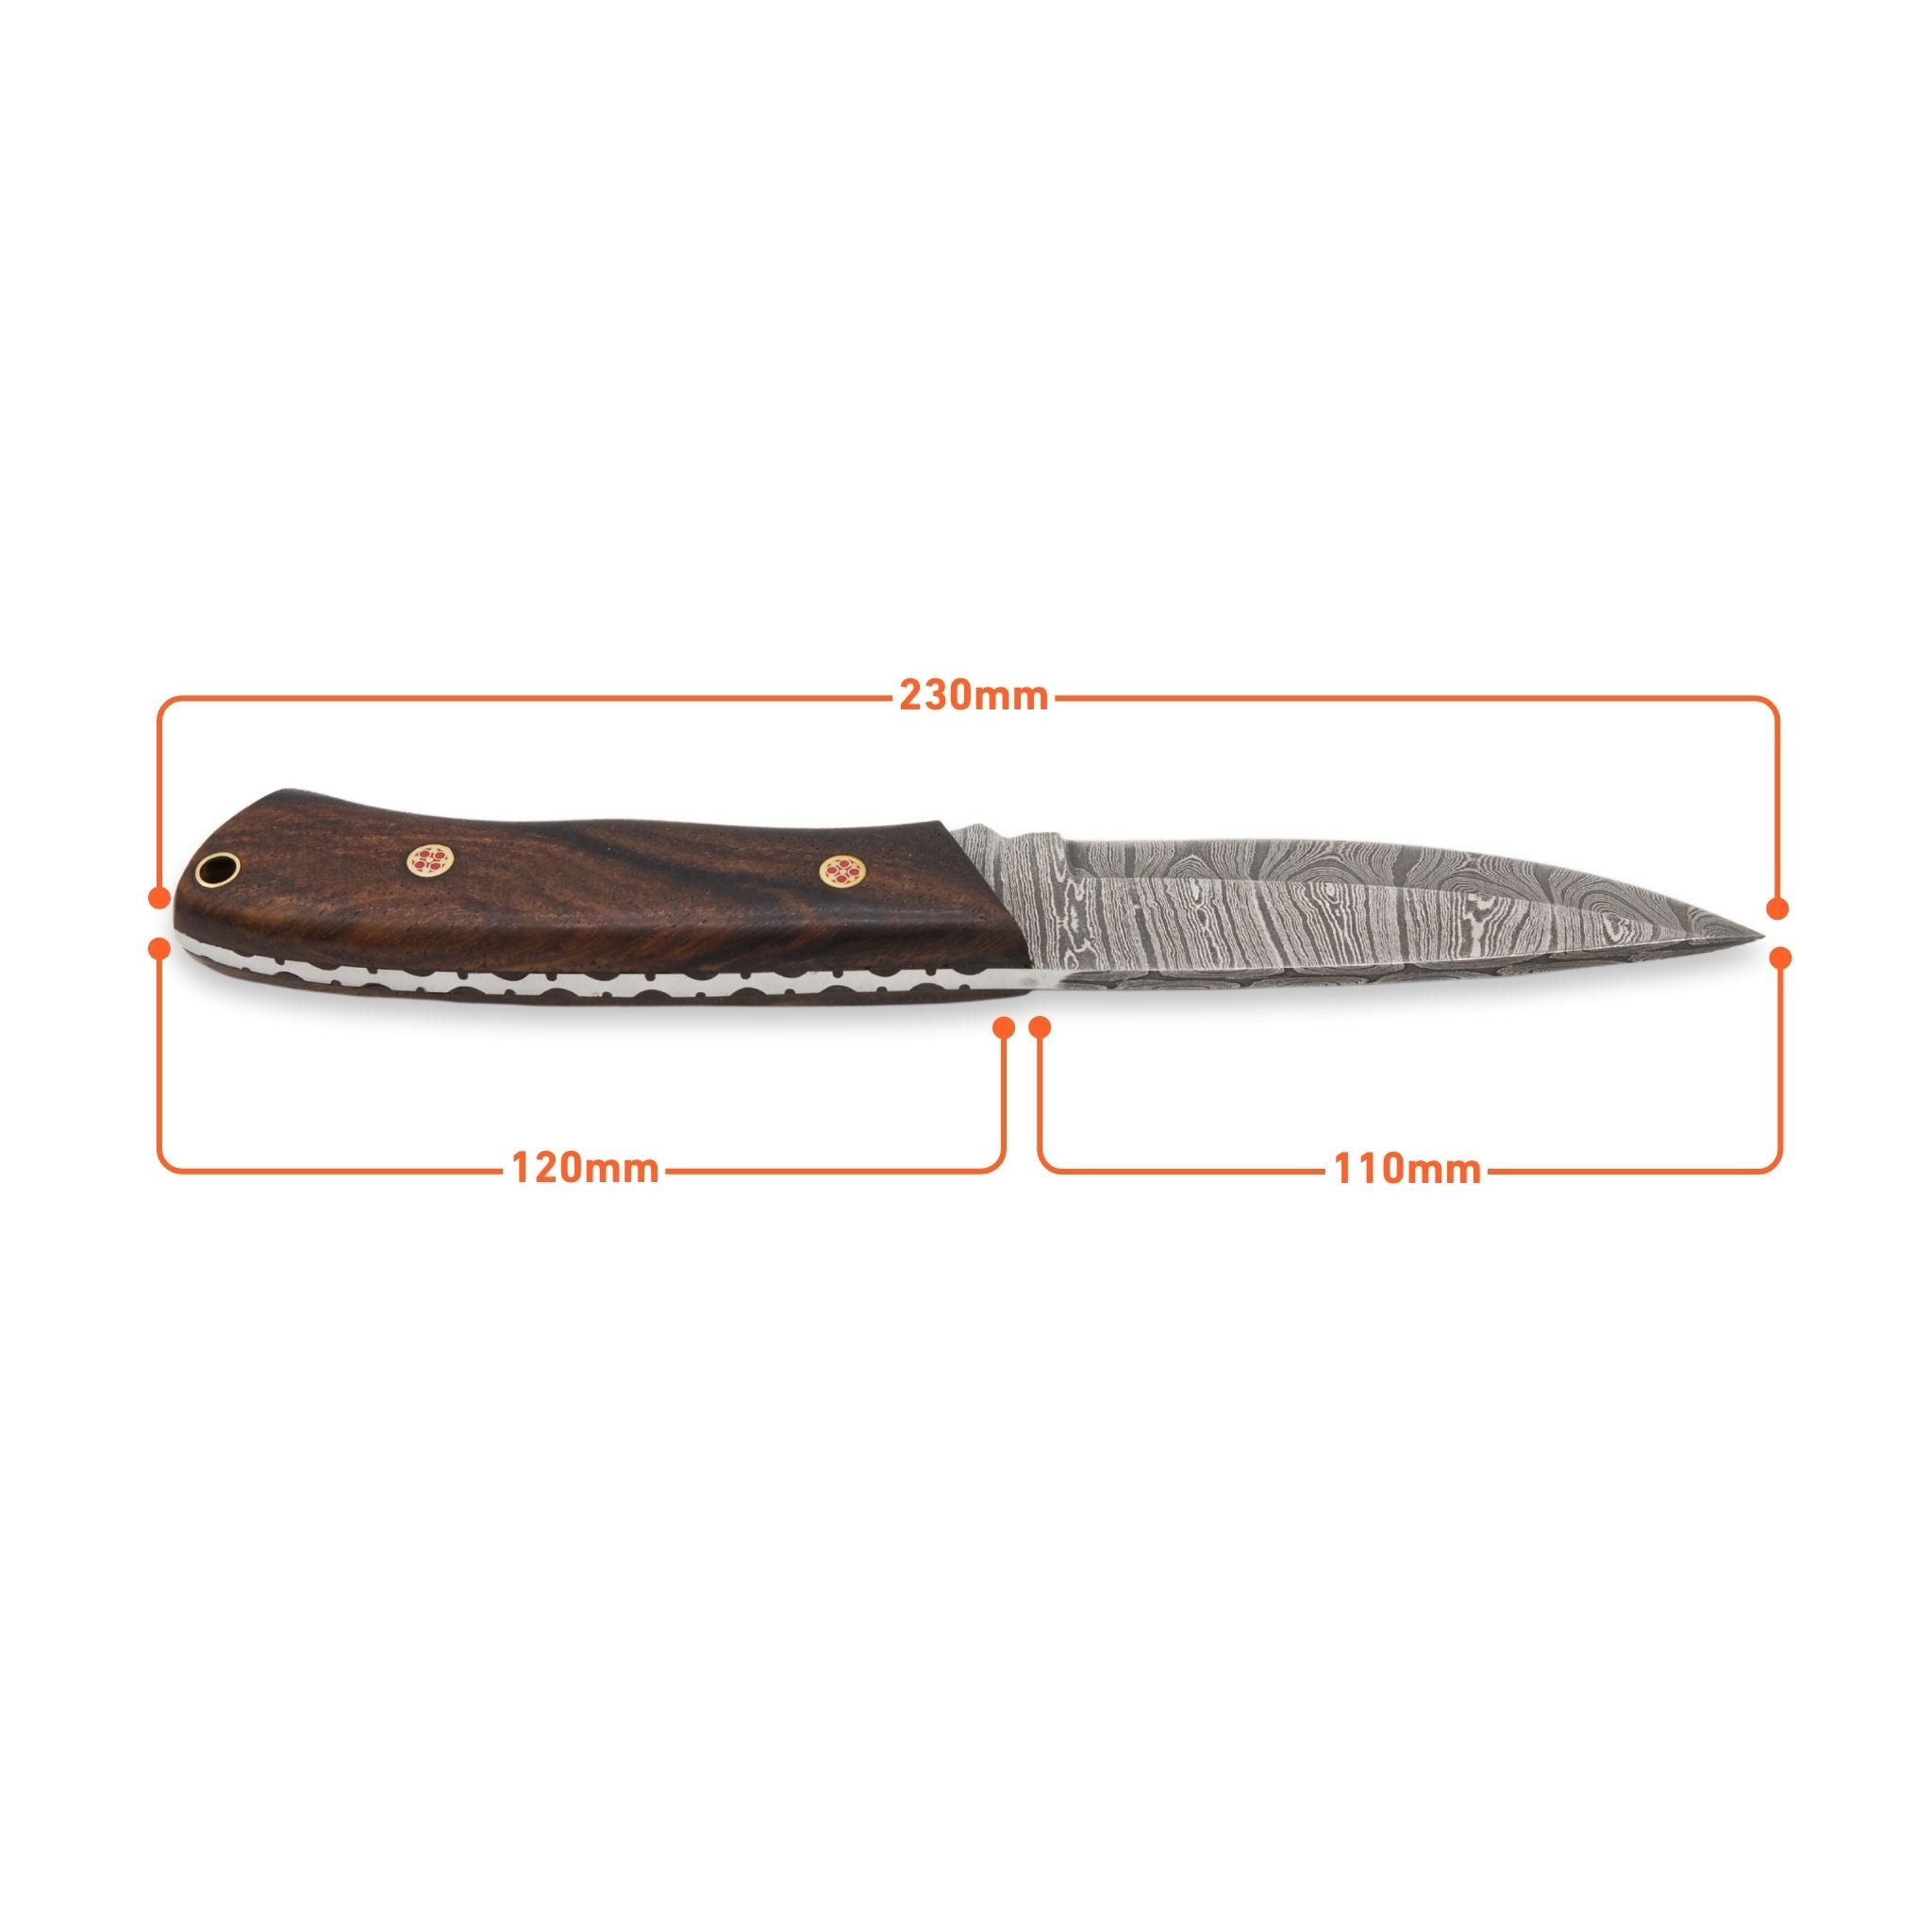 Outback Nomad II, Damascus Steel, Handmade Hunting Knife